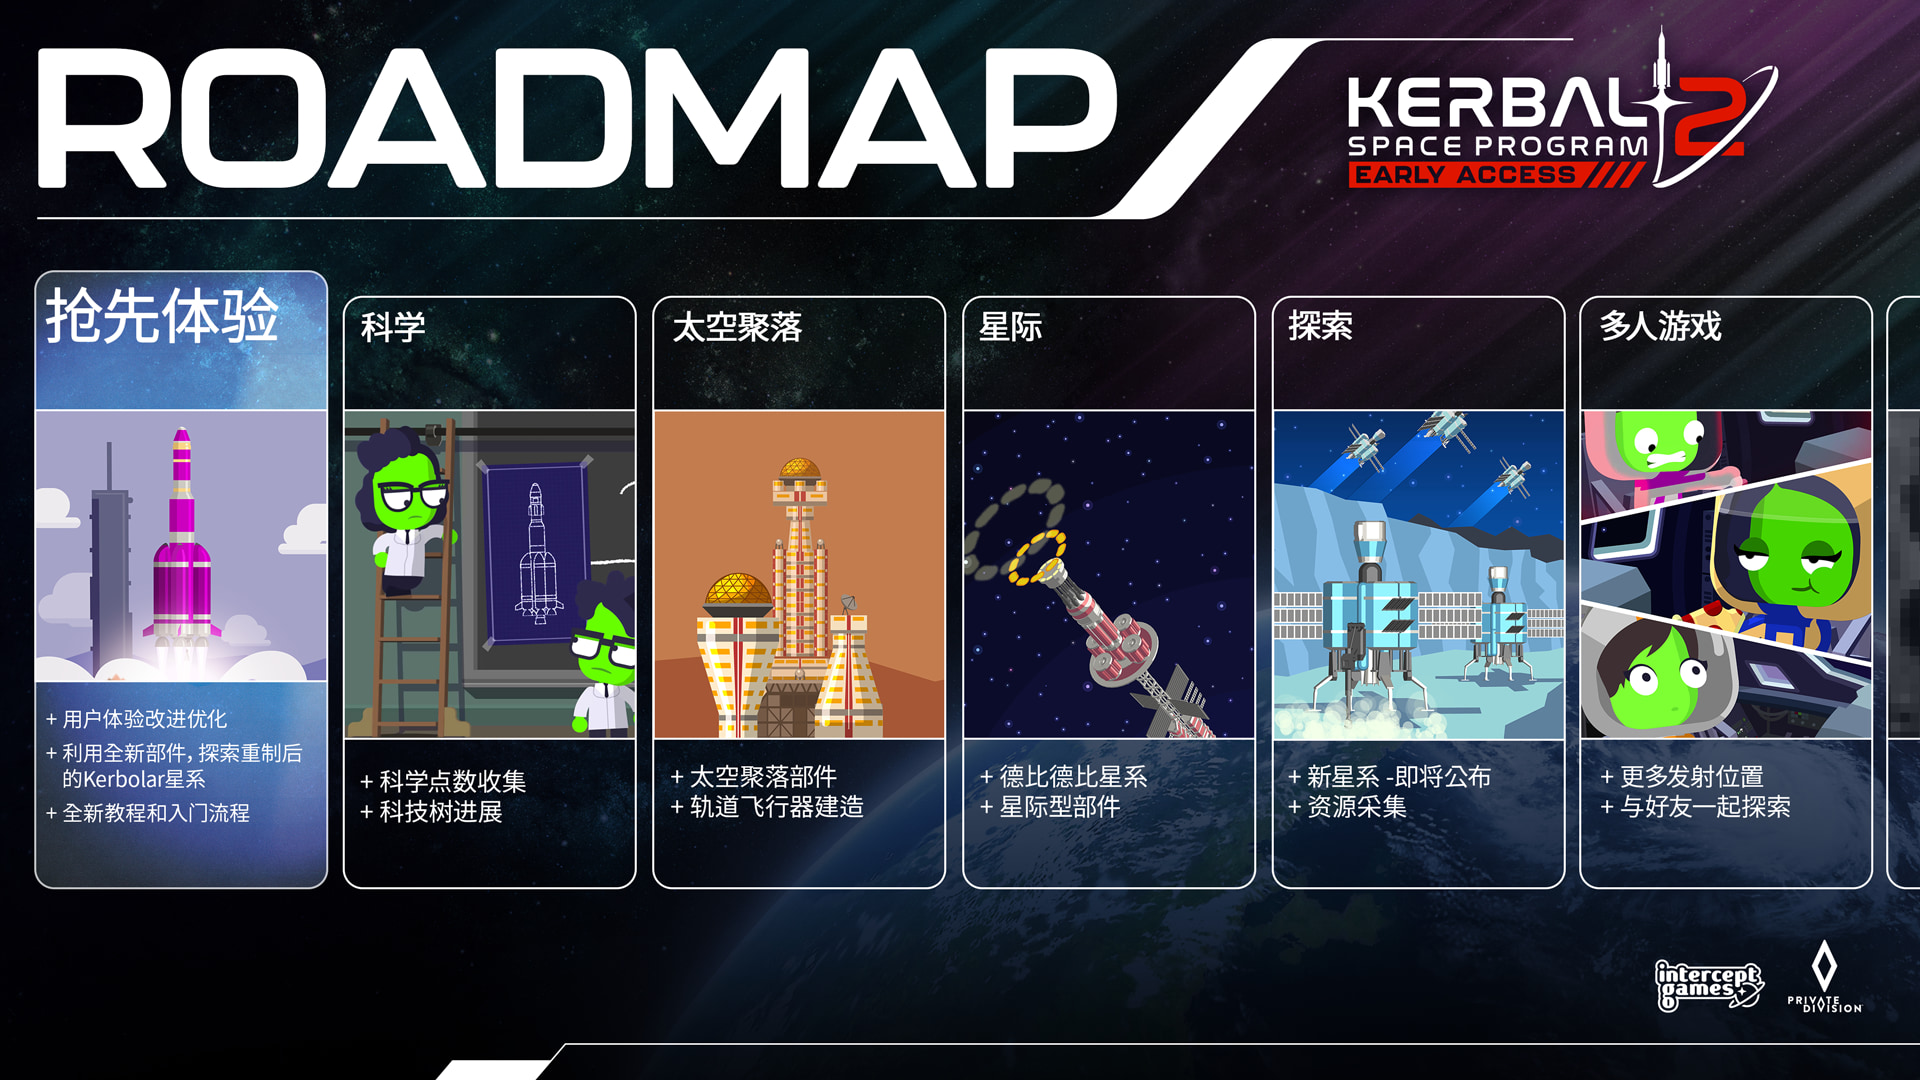 KSP2 Steam About ROADMAP SCH